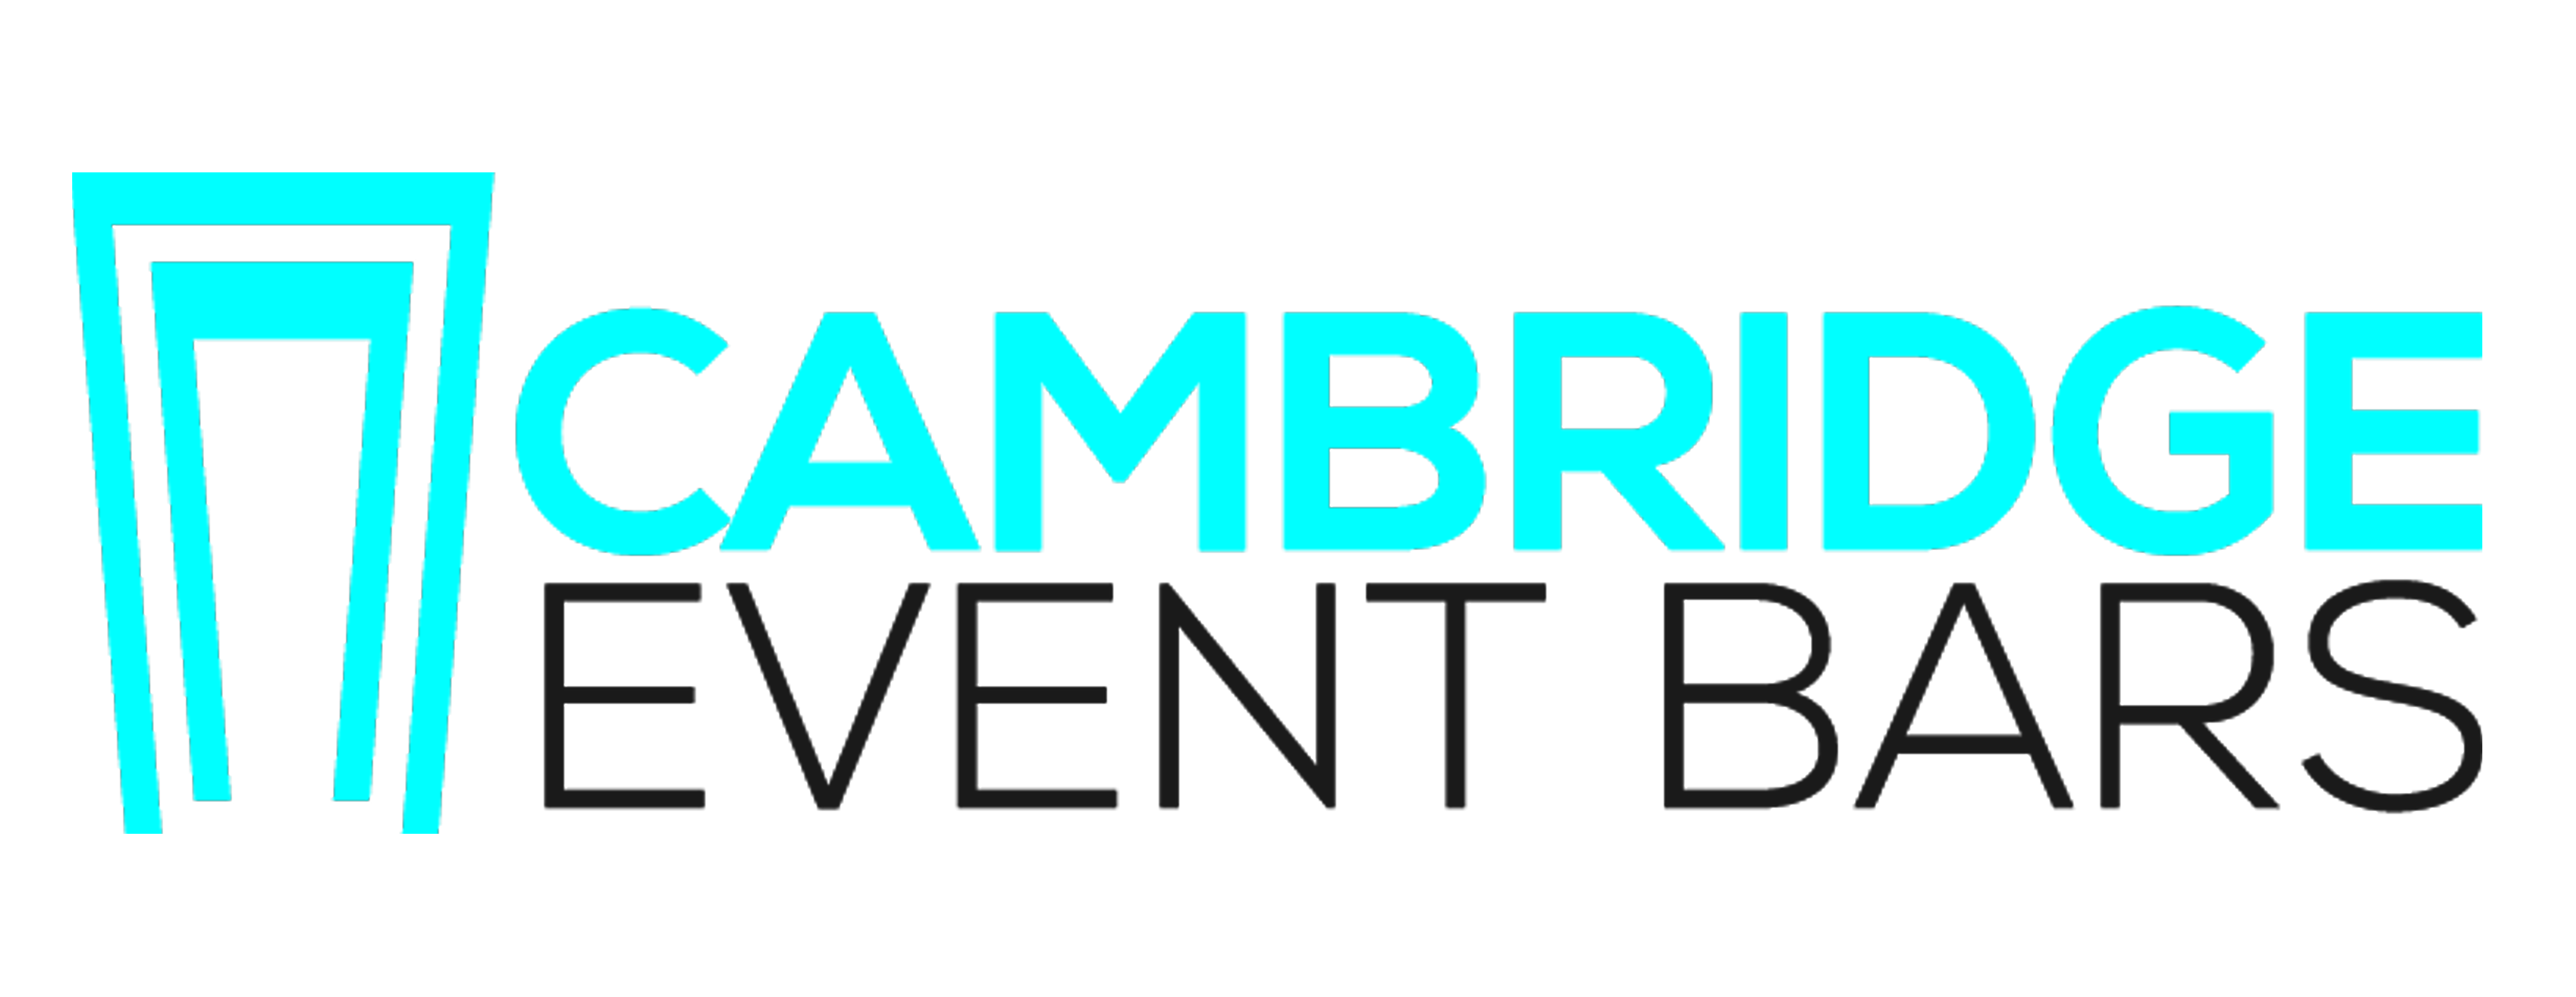 cambridge event bars